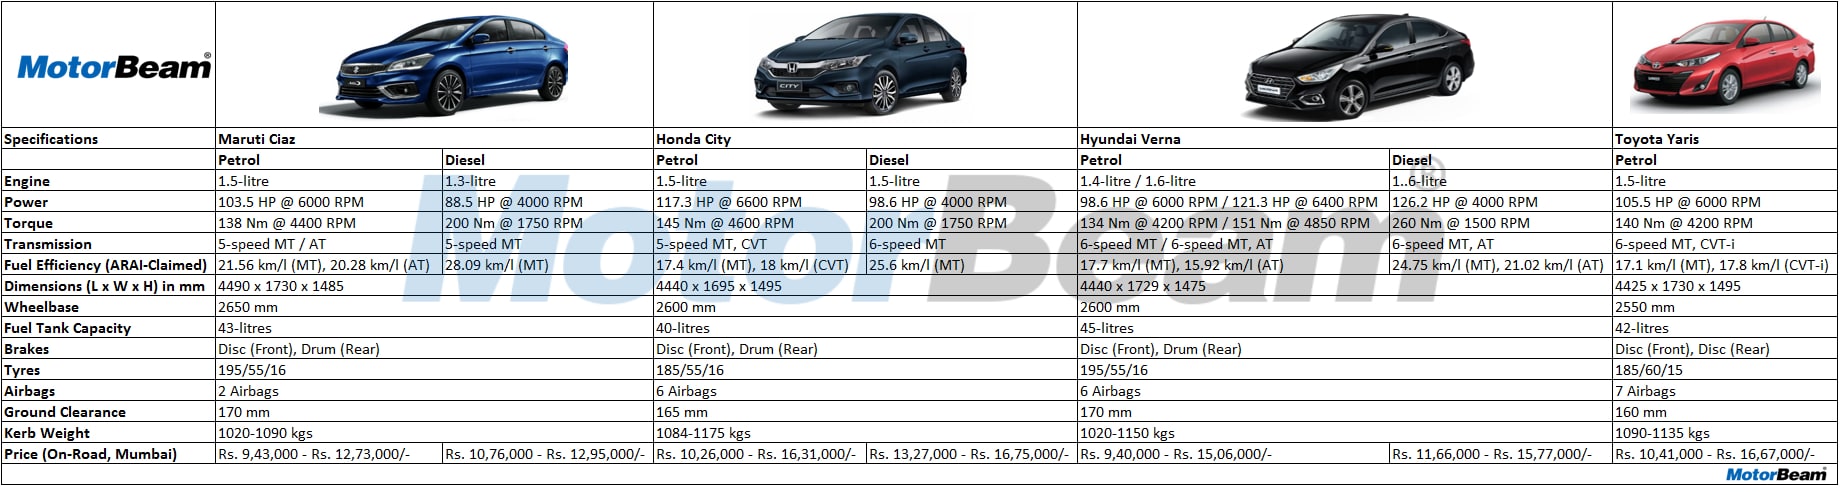 Maruti Ciaz vs Honda City vs Hyundai Verna vs Toyota Yaris Spec Comparo